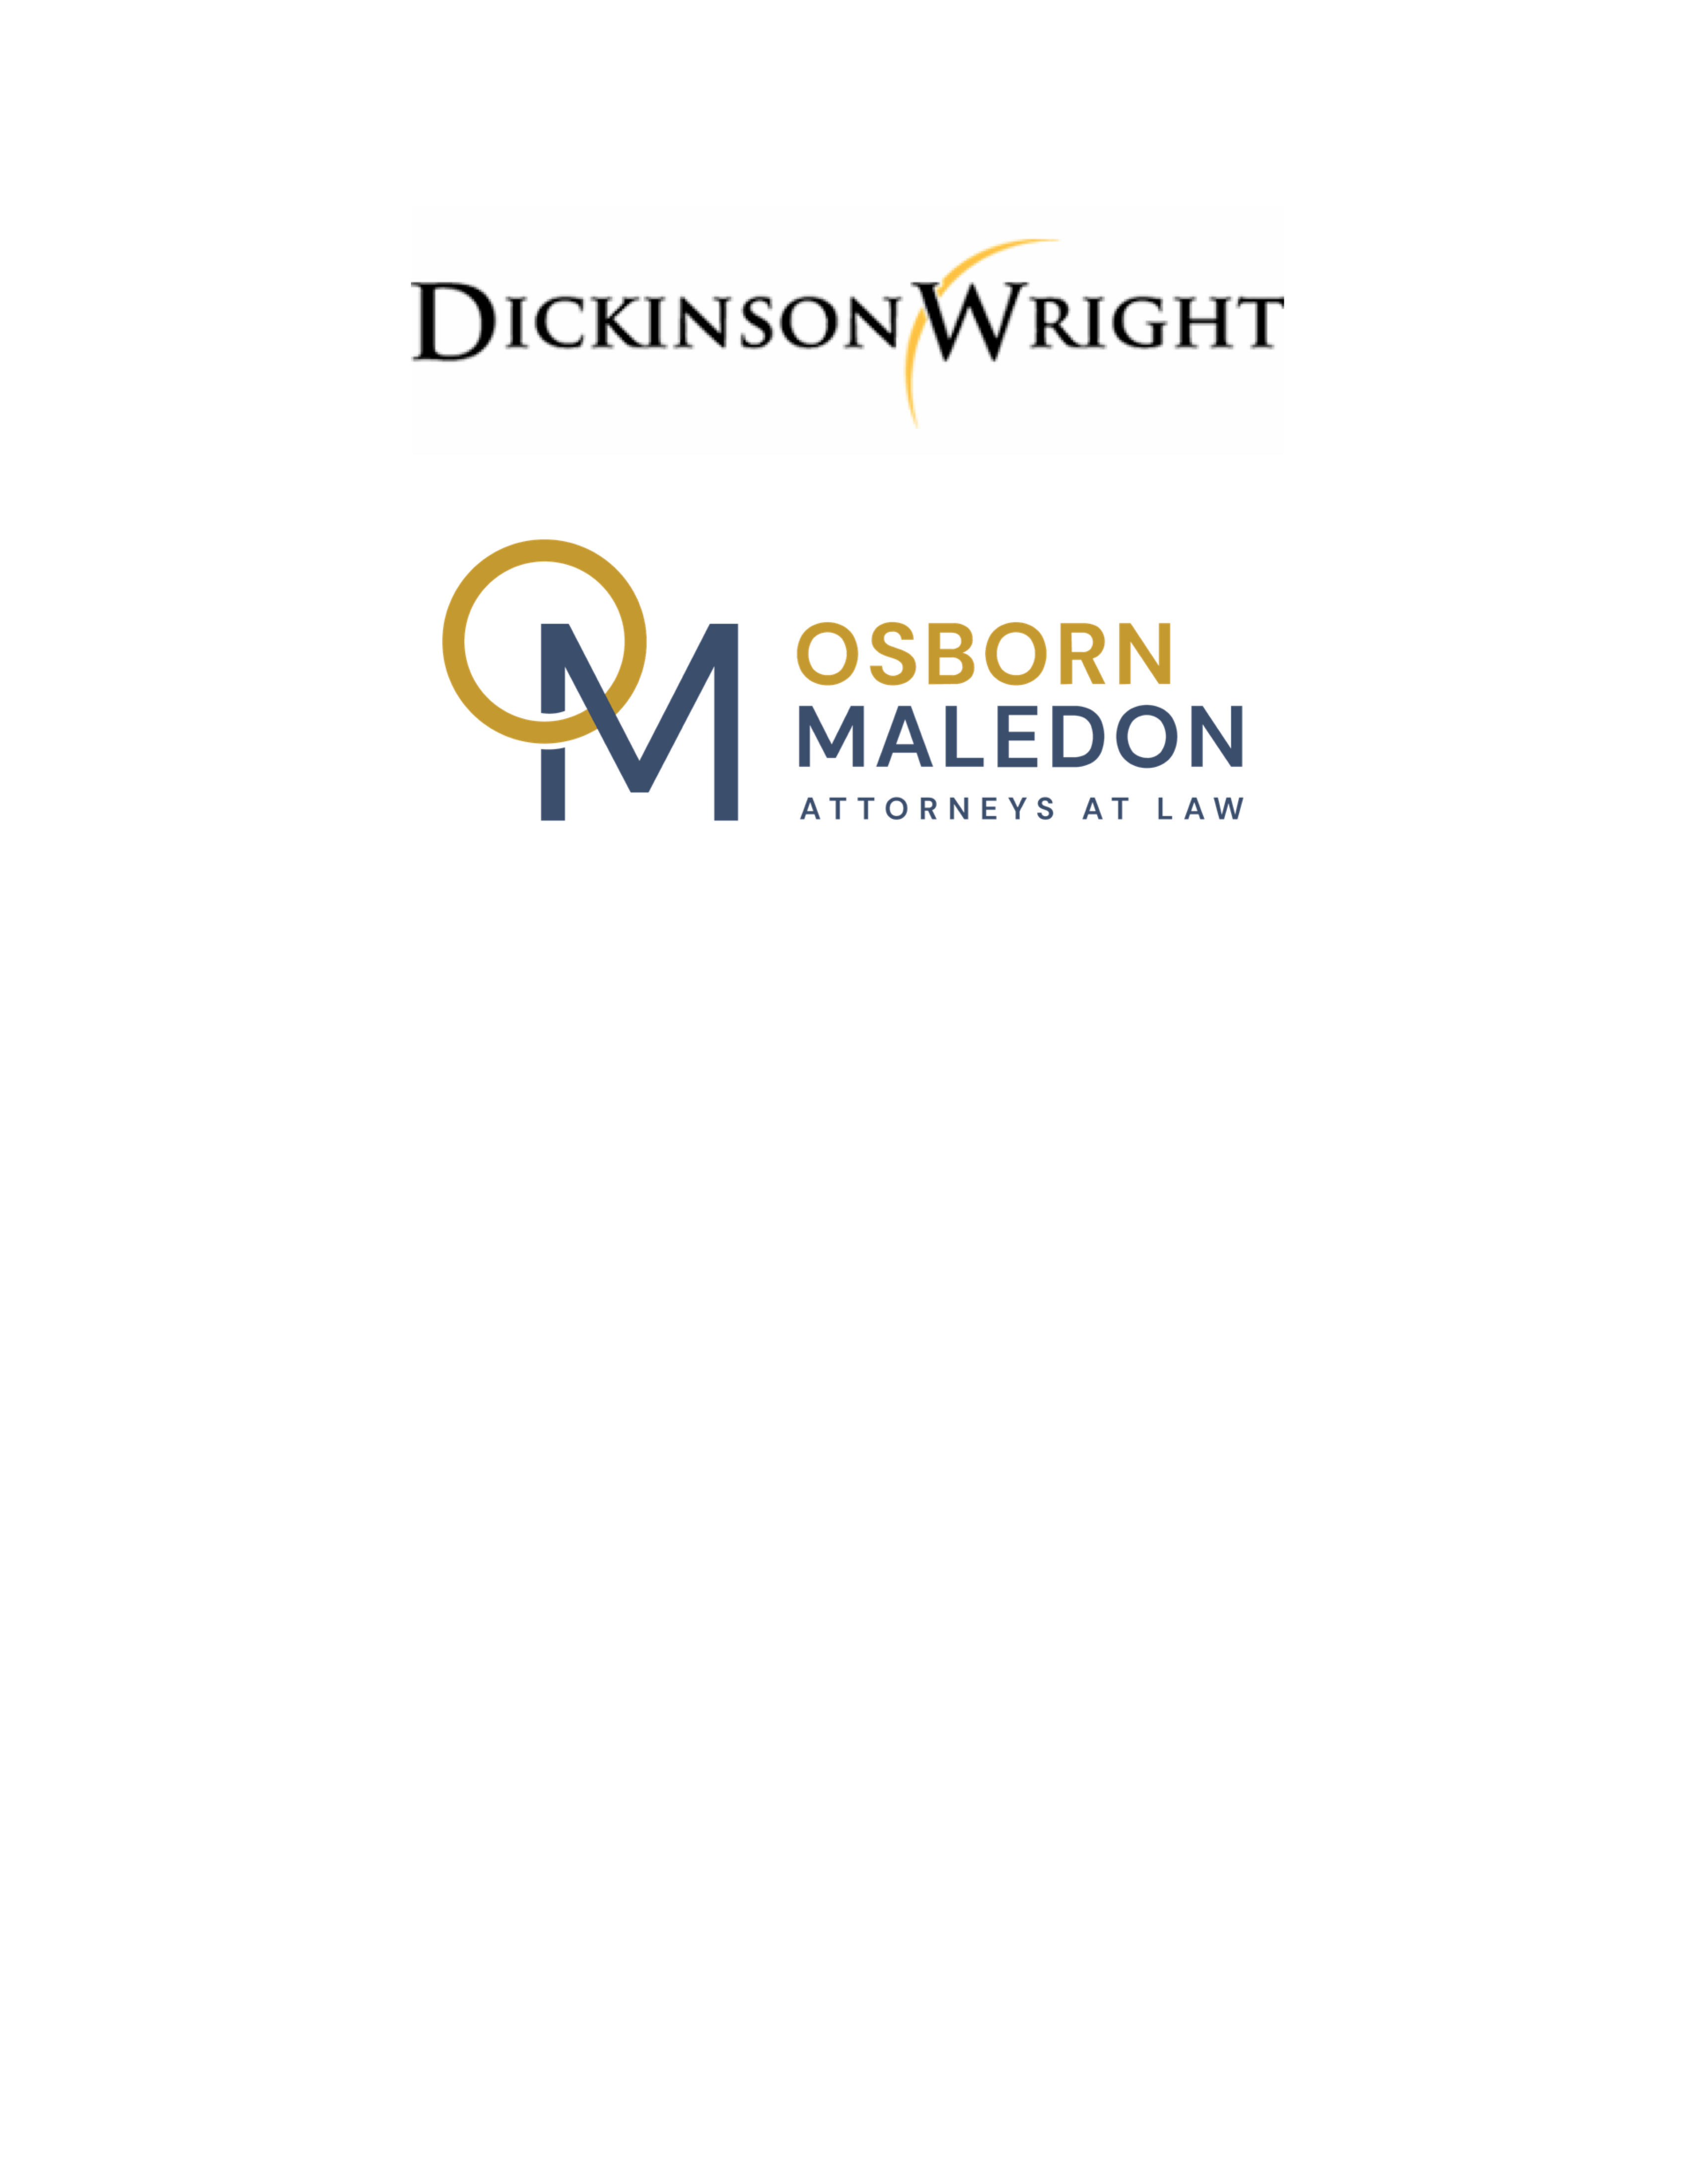 Dickinson Wright and Osborn Maledon Logos